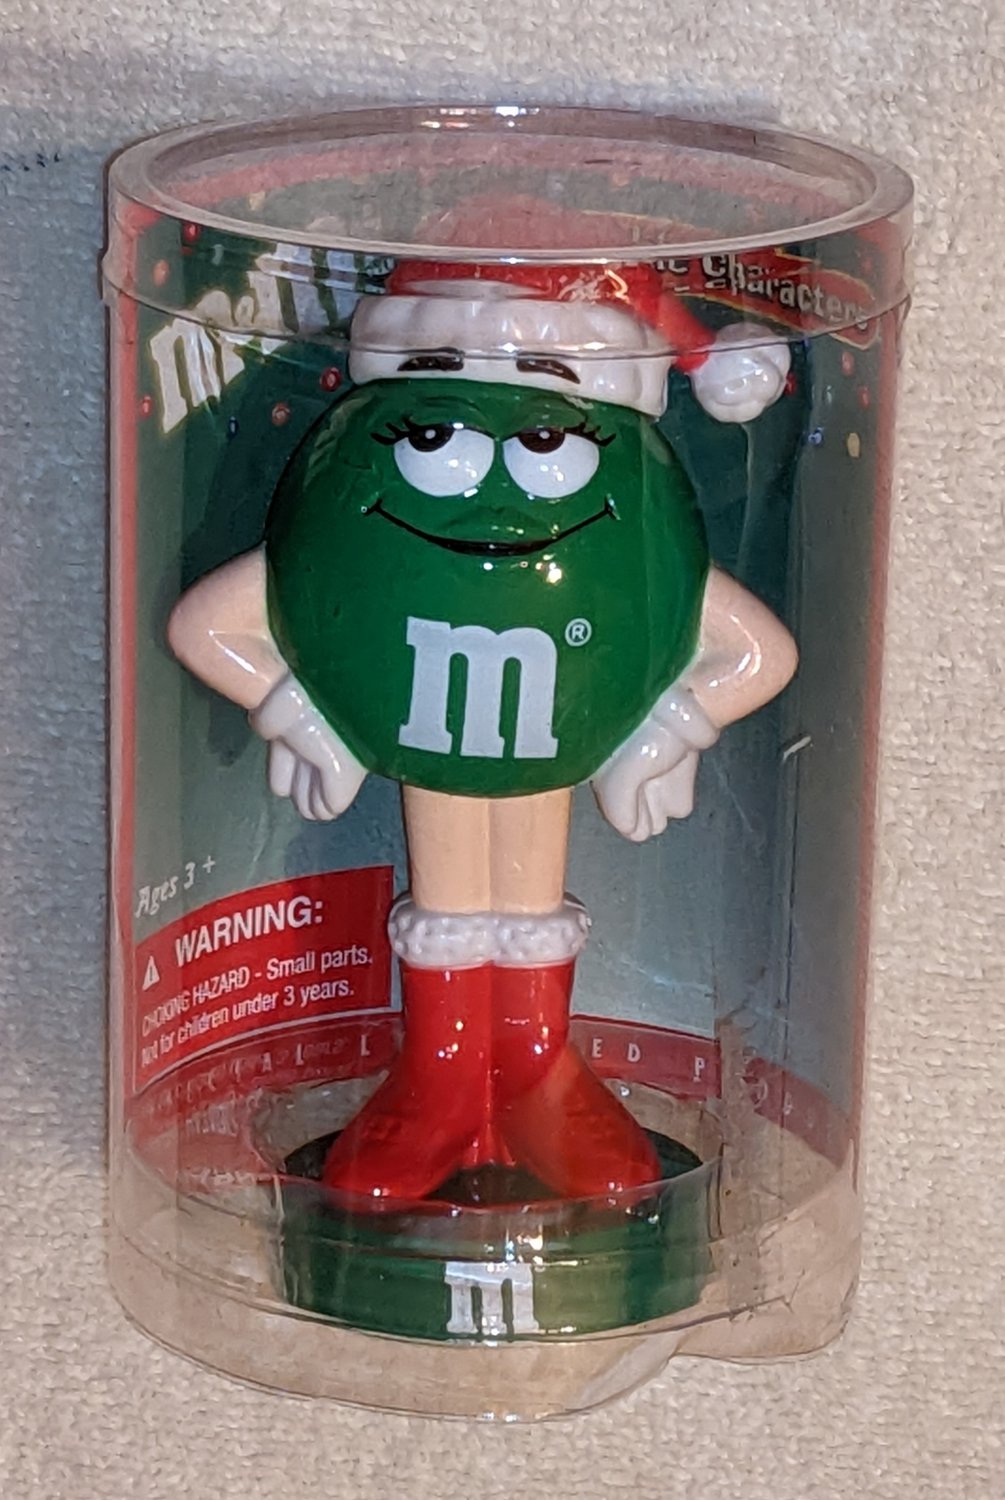 M&M's Candies Green Mini Bobble Character Christmas Holiday 2003 NIP